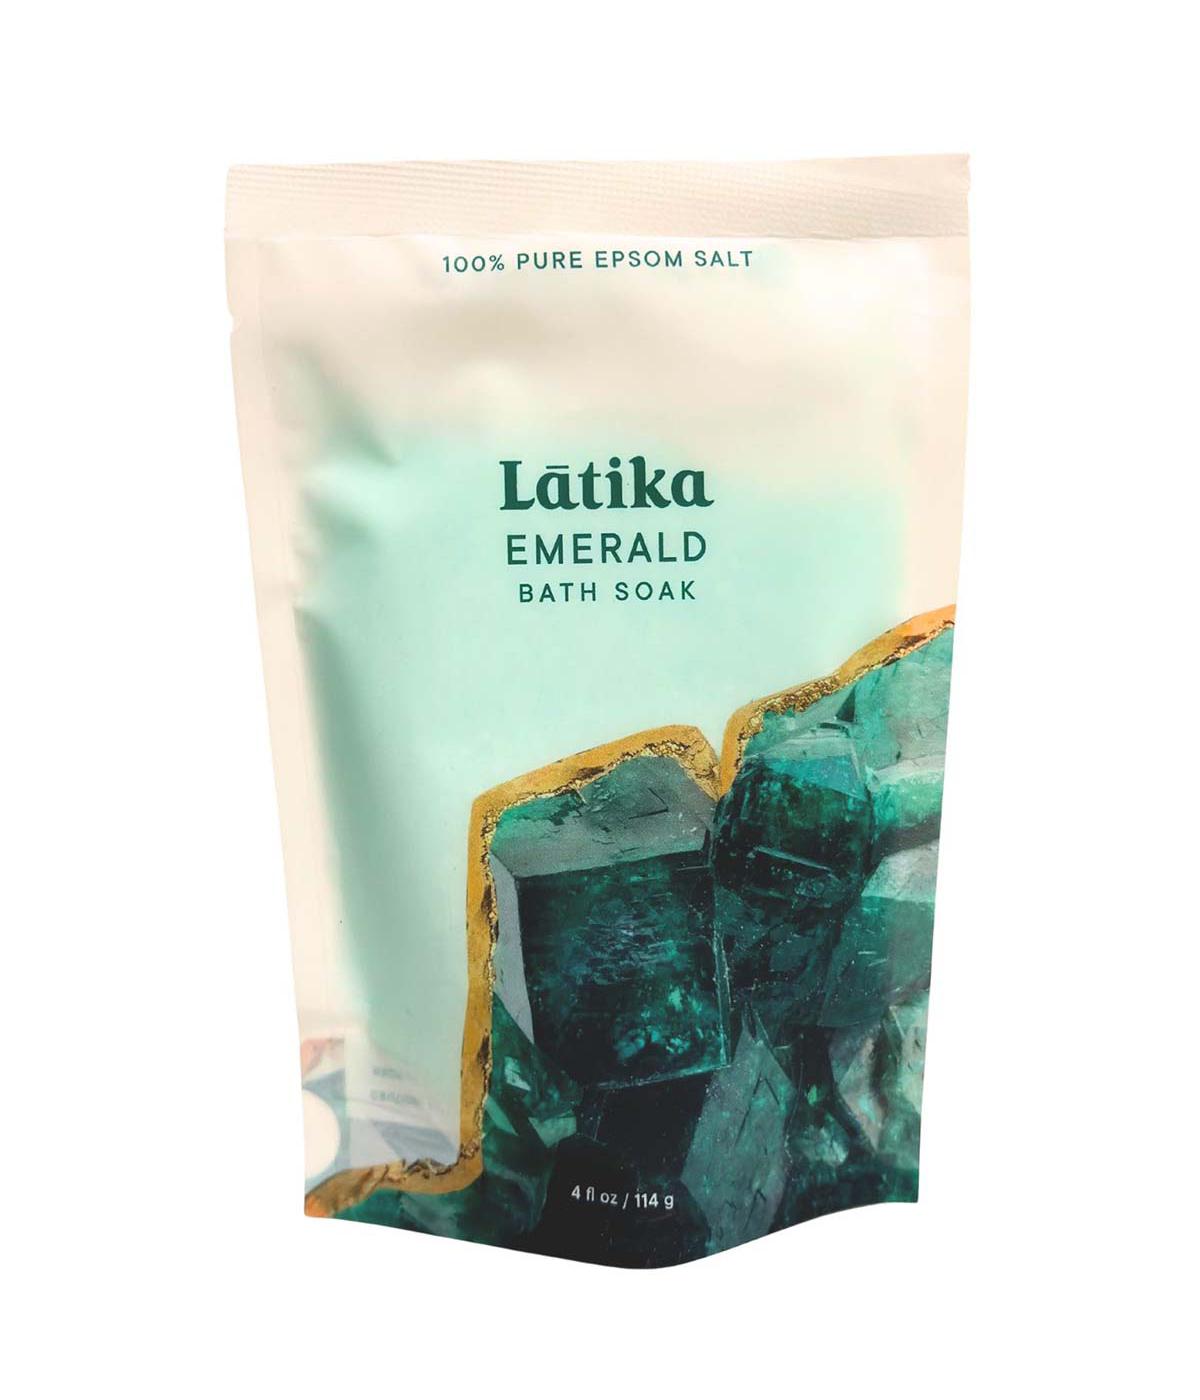 Latika Body Essentials Bath Soak - Emerald; image 1 of 2